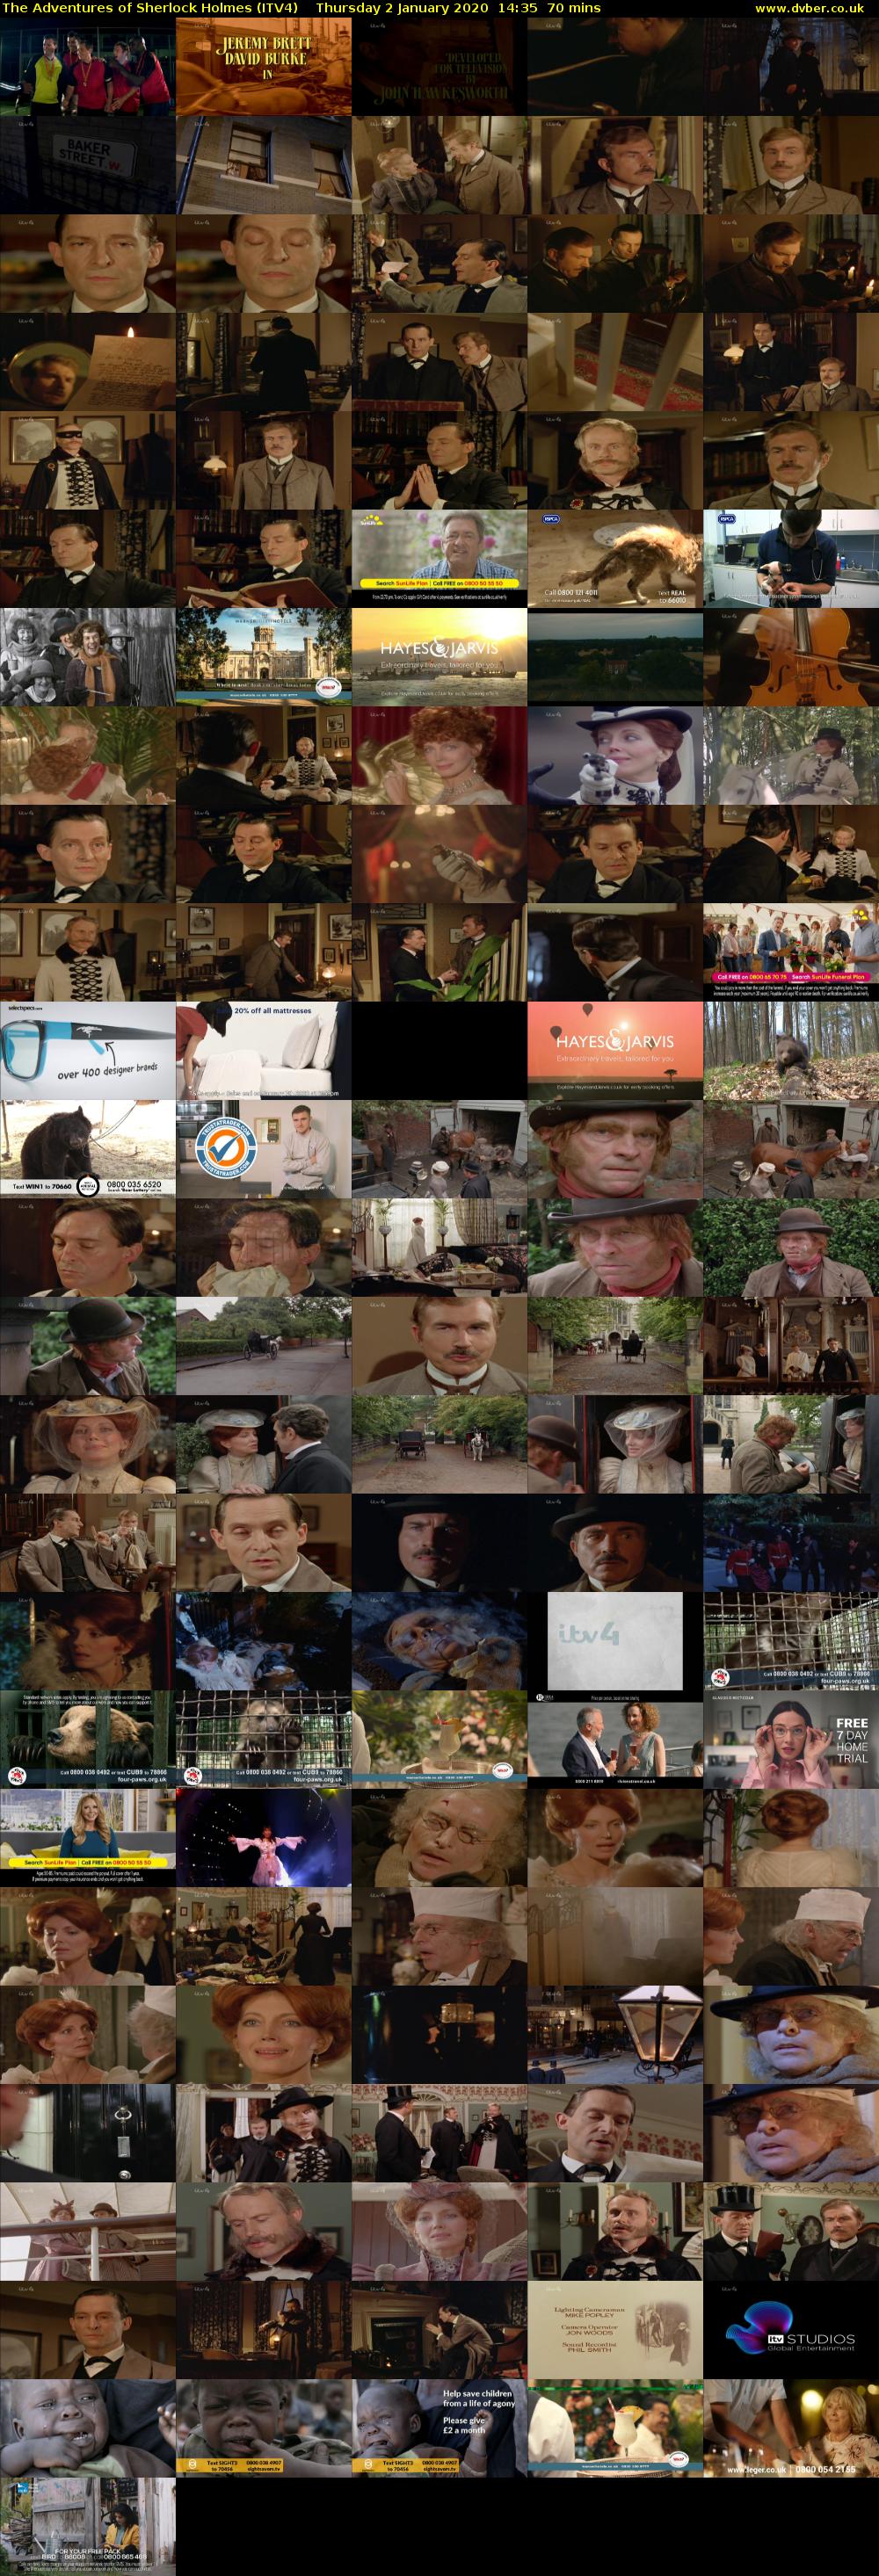 The Adventures of Sherlock Holmes (ITV4) Thursday 2 January 2020 14:35 - 15:45